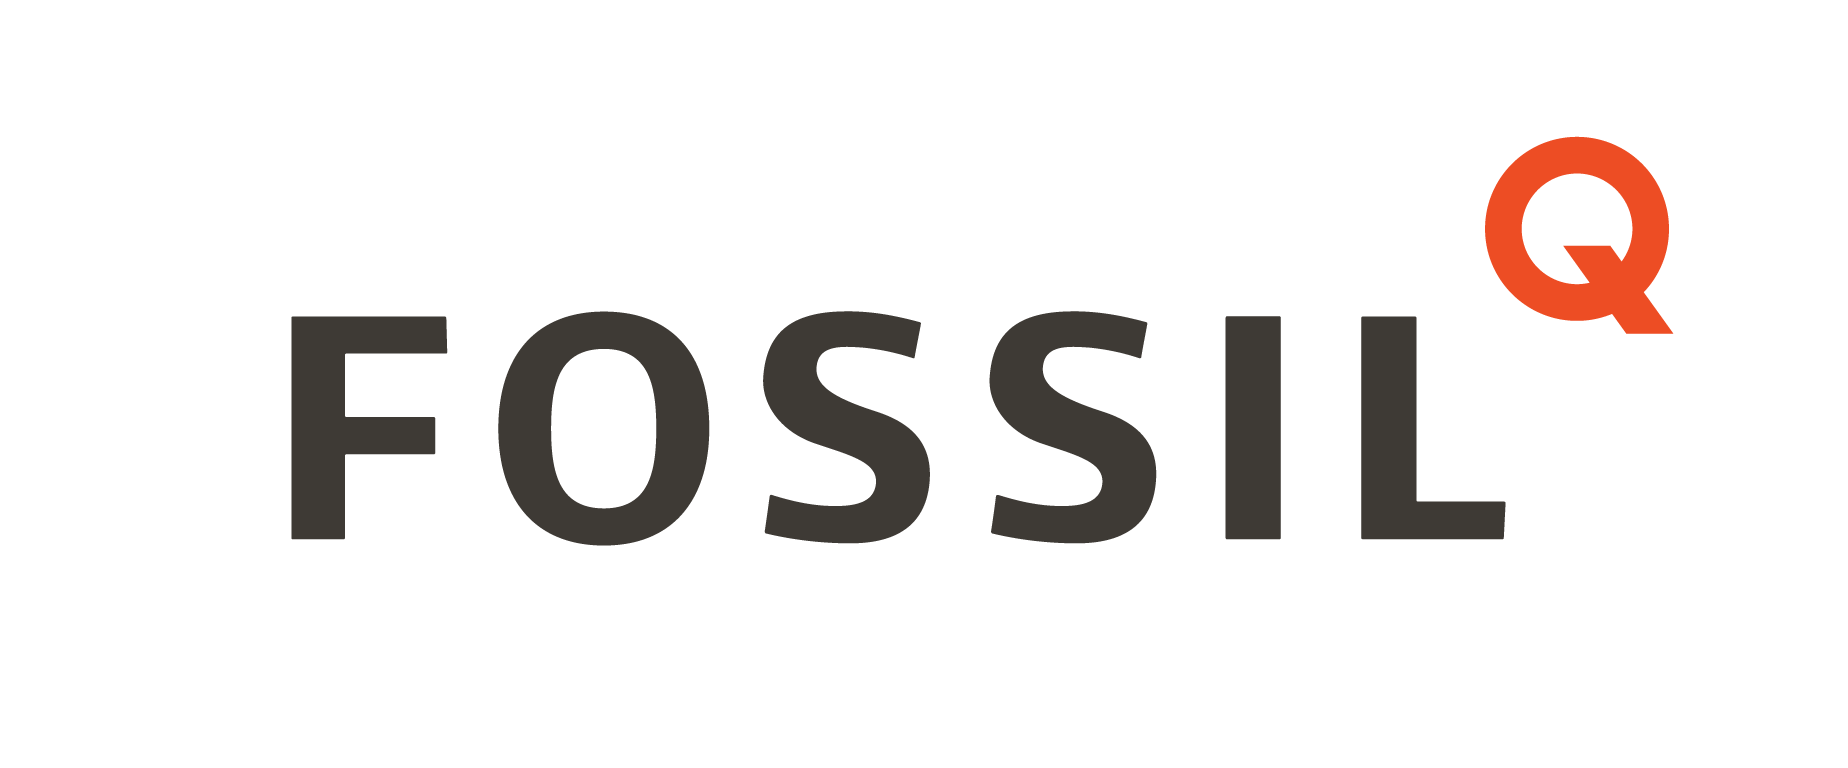 fossil q